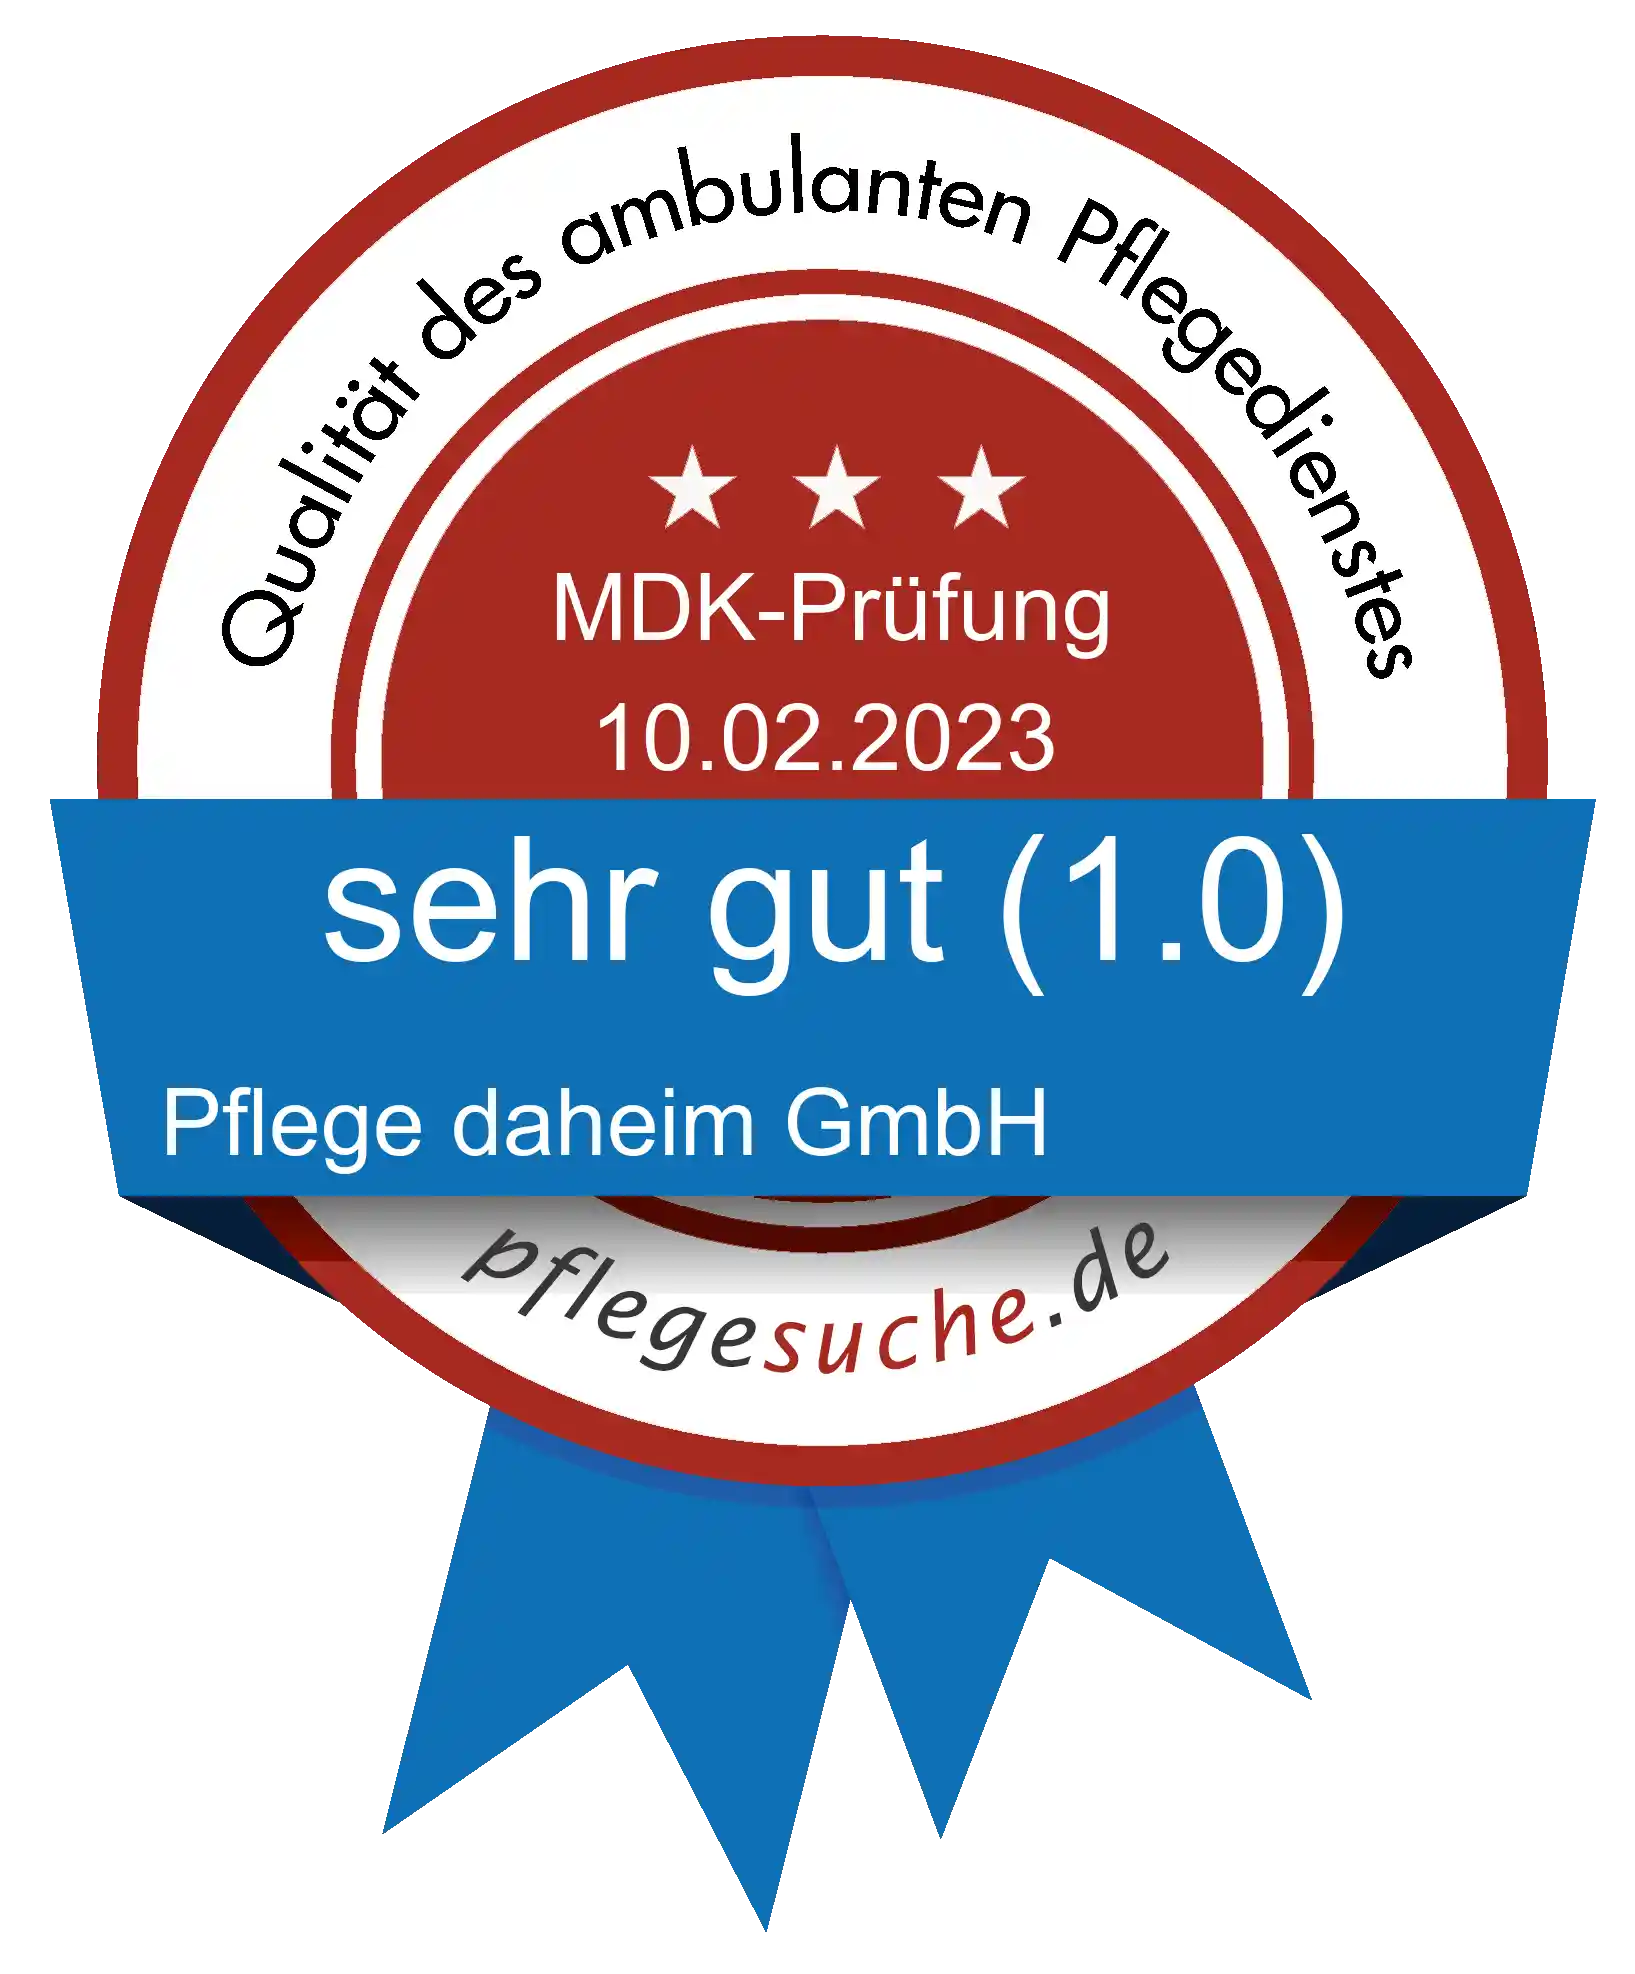 Siegel Benotung Pflege daheim GmbH